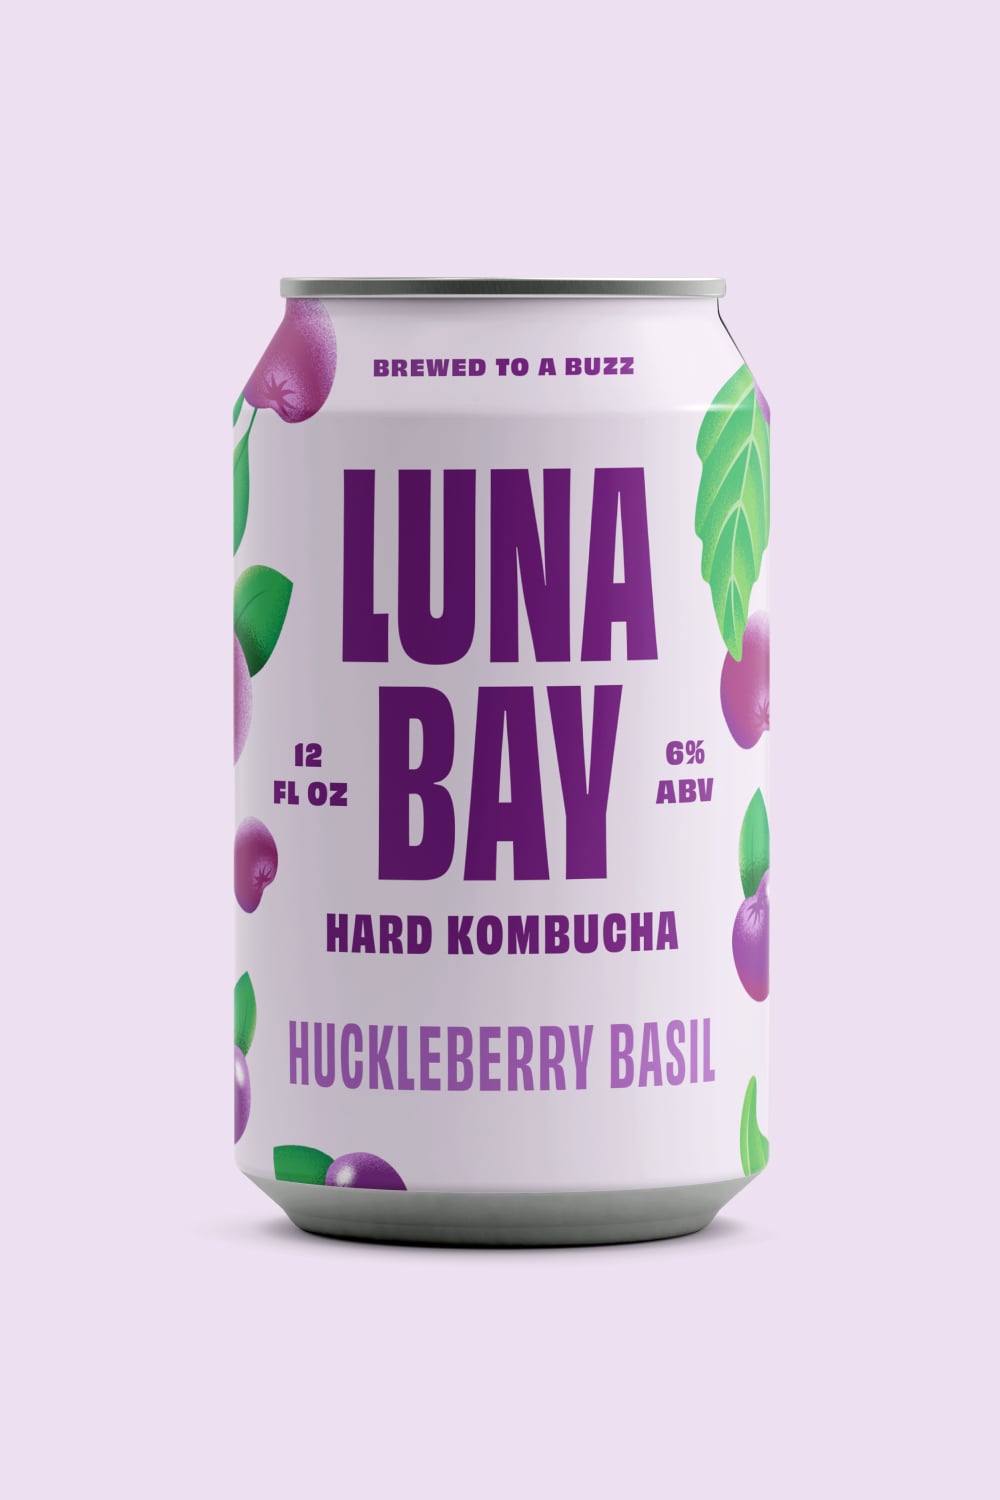 hard-kombucha-huckleberry-basil-min.jpg